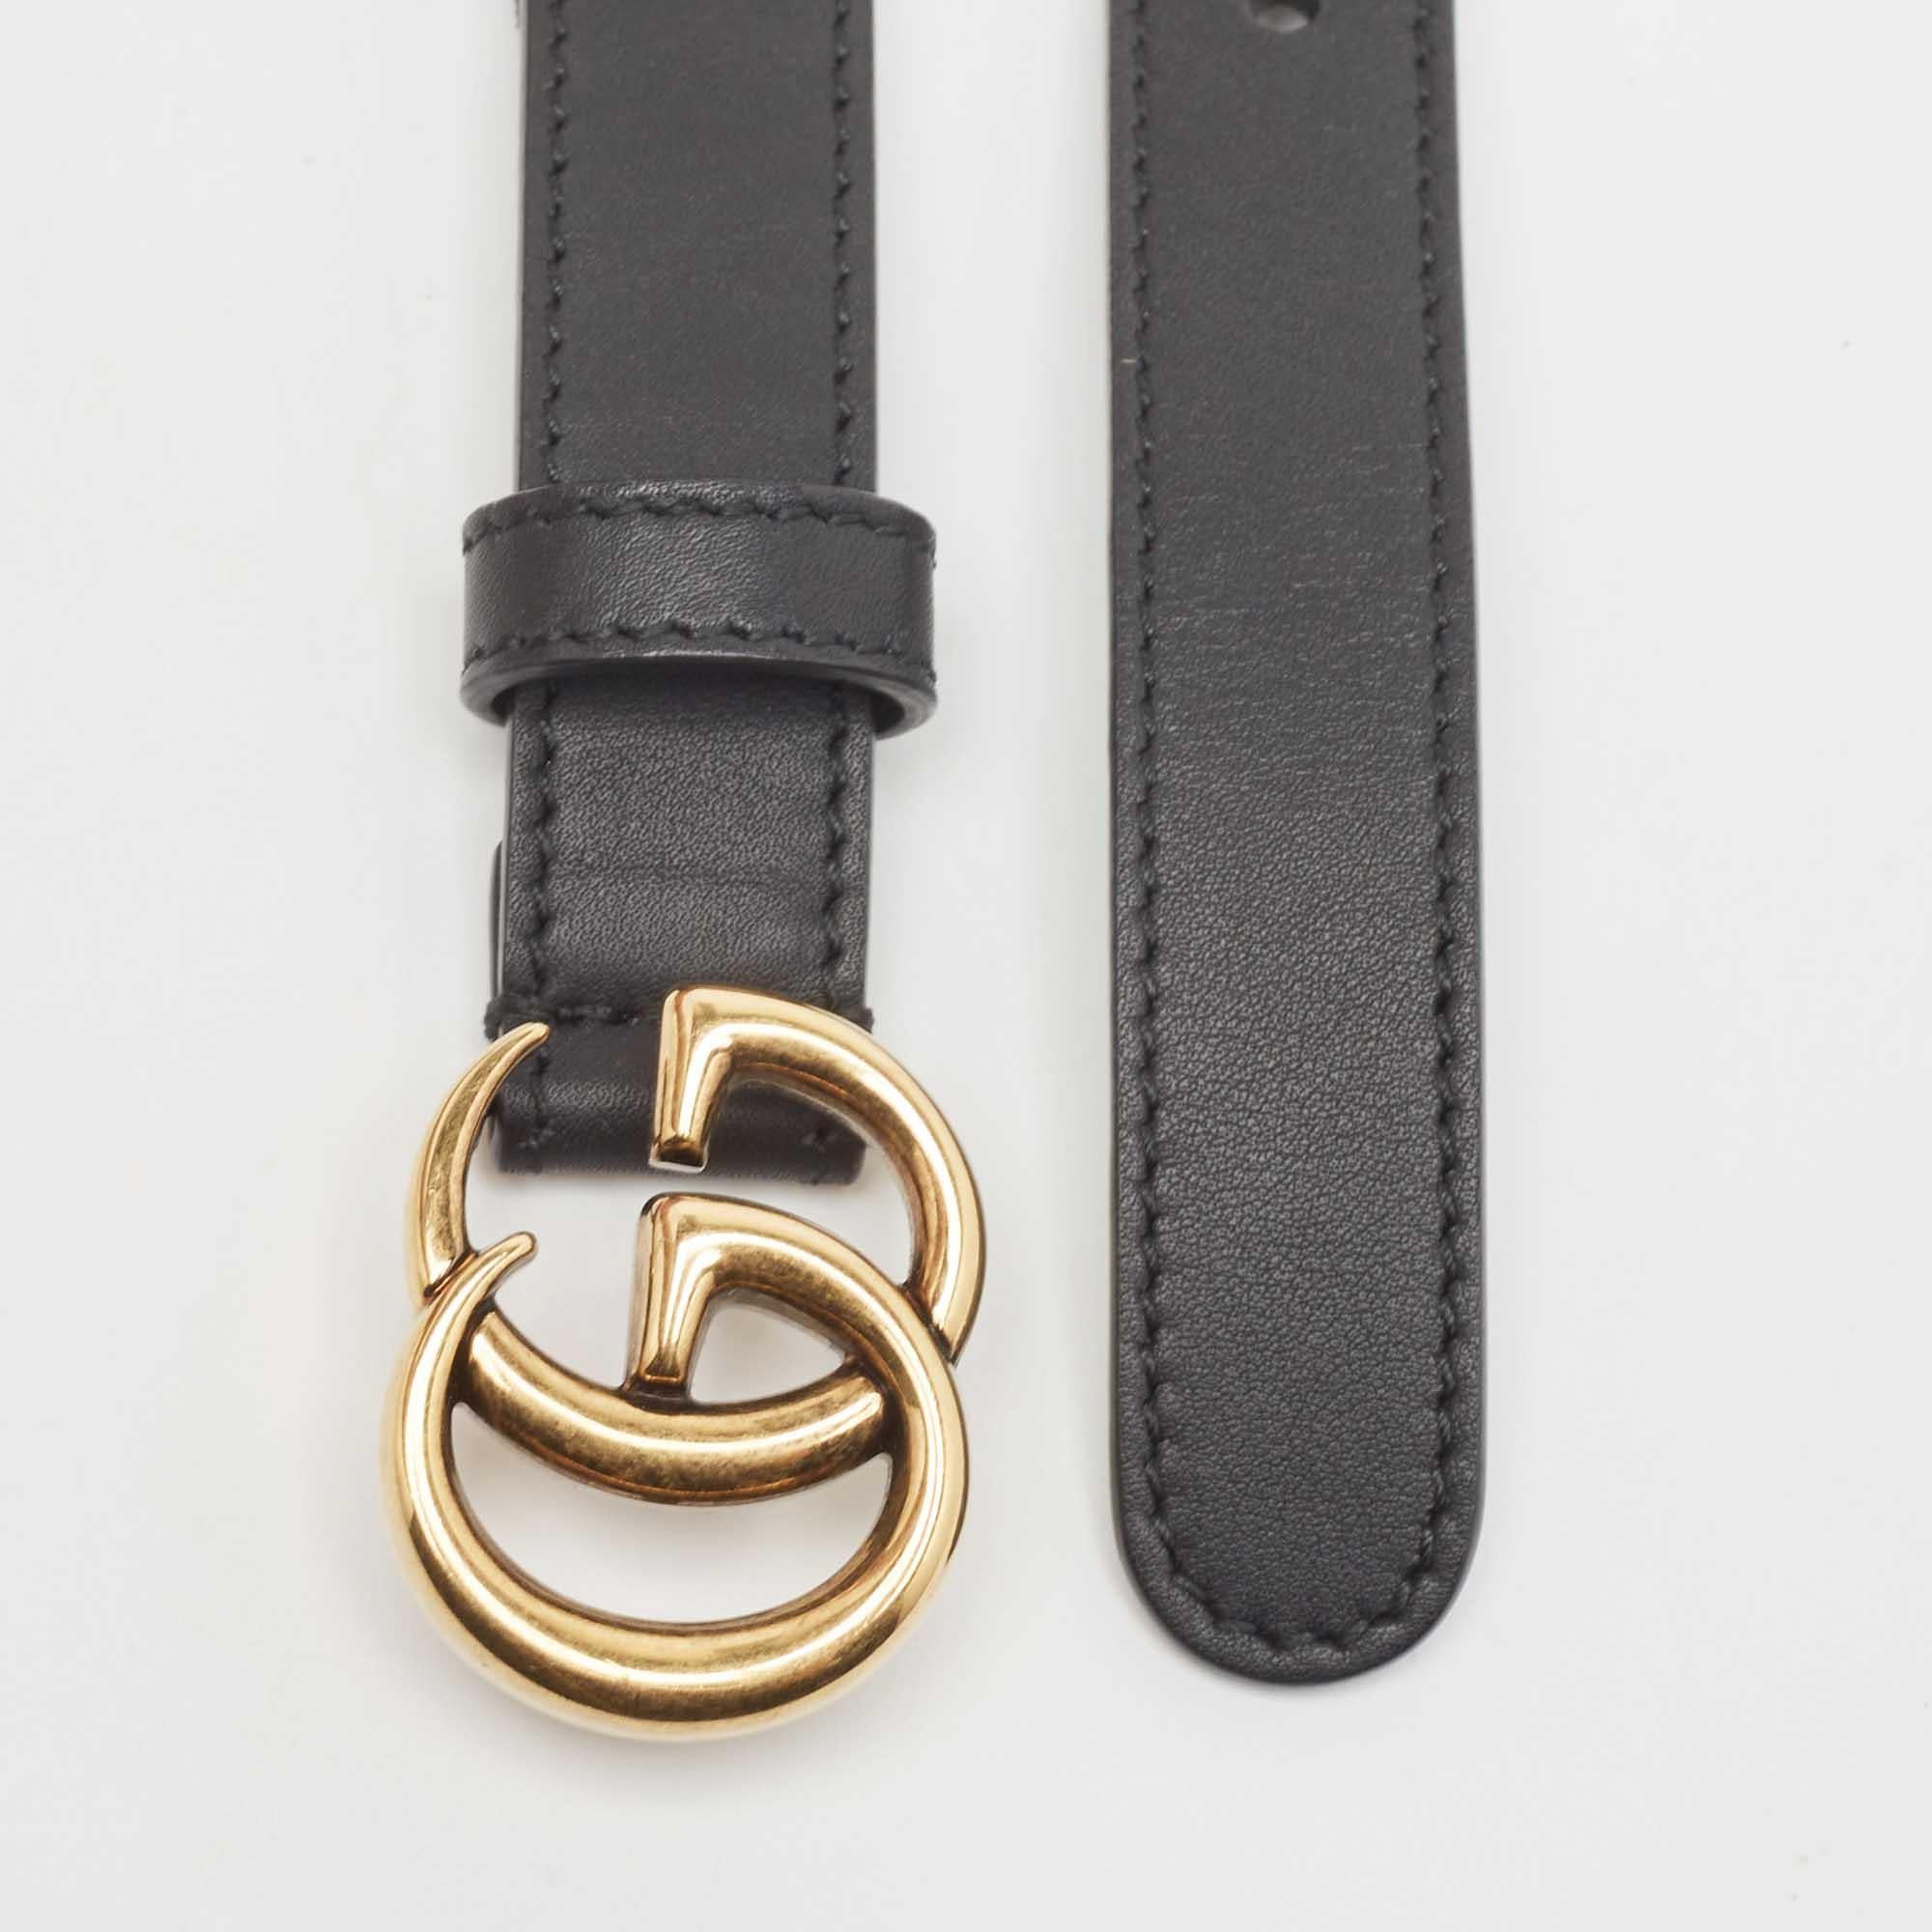 Gucci Black Leather Double G Buckle Slim Belt 85 CM In New Condition For Sale In Dubai, Al Qouz 2